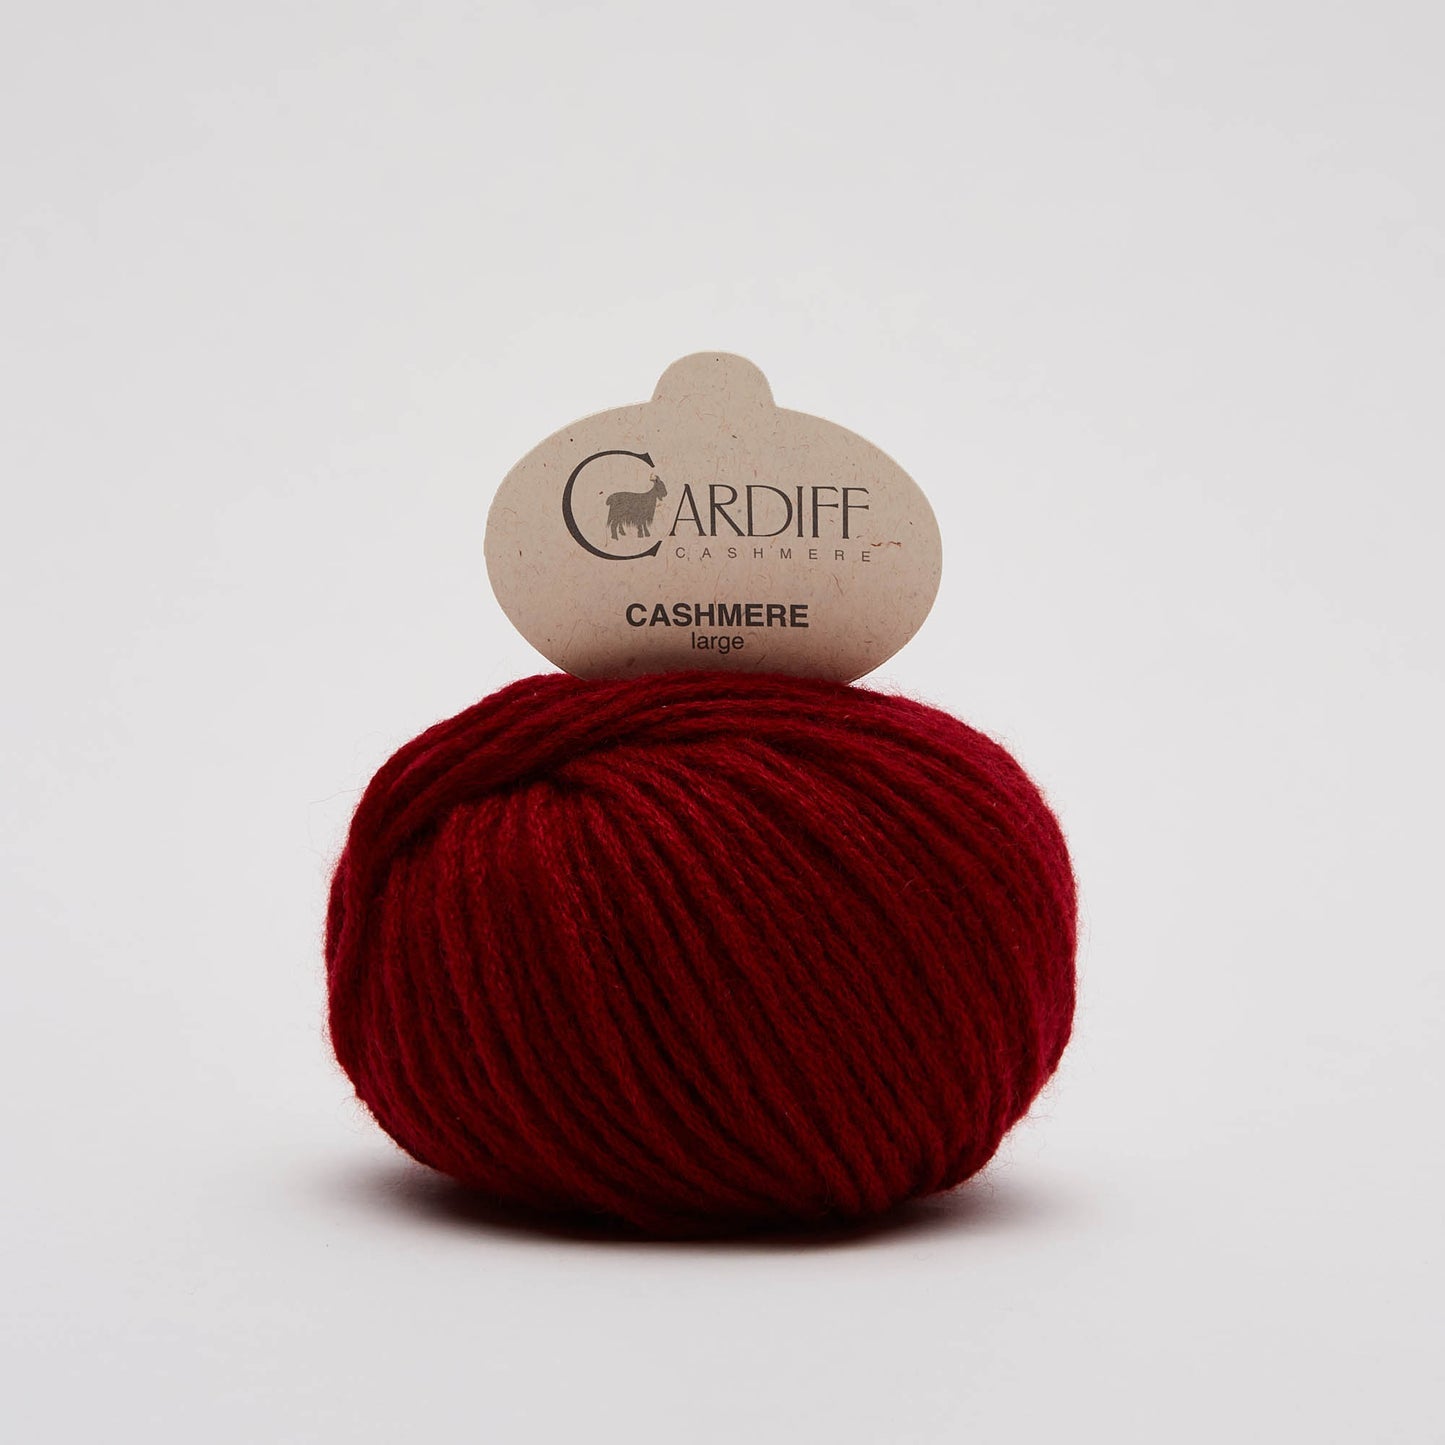 Cardiff LARGE gentle yarn, 714, SCARLATTA, comp: 100% Cashmere